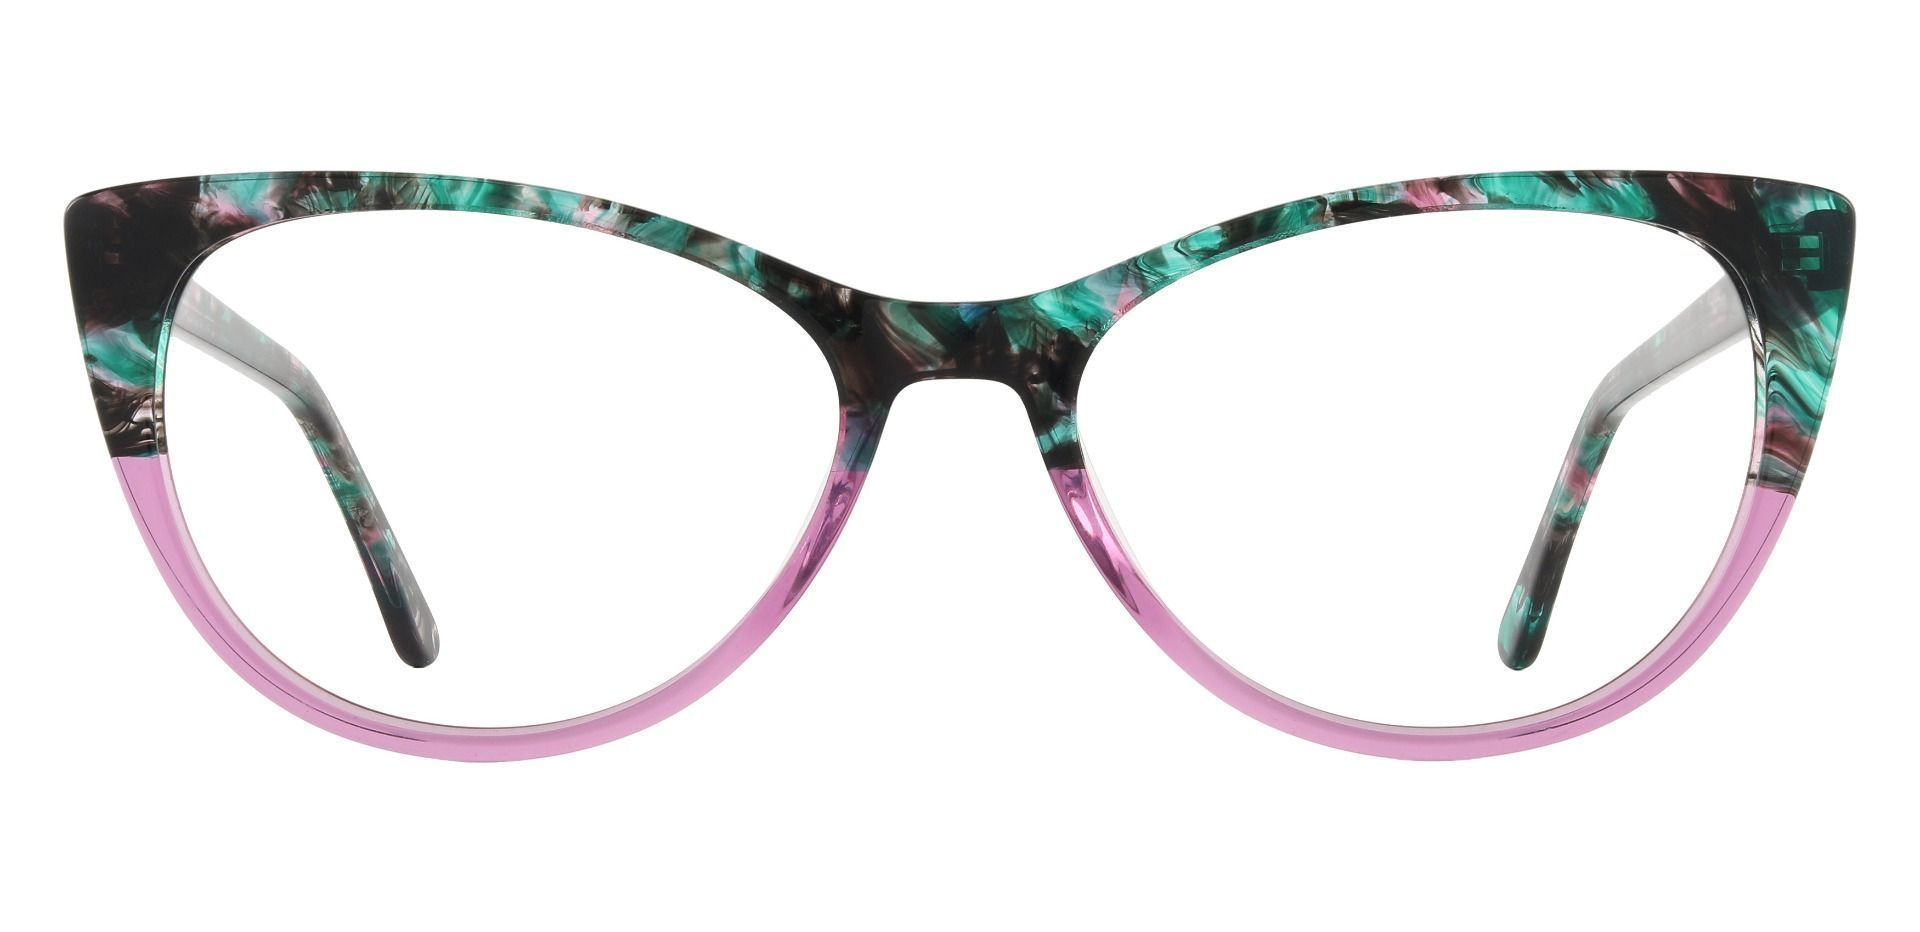 Valmora Oval Prescription Glasses - Pink